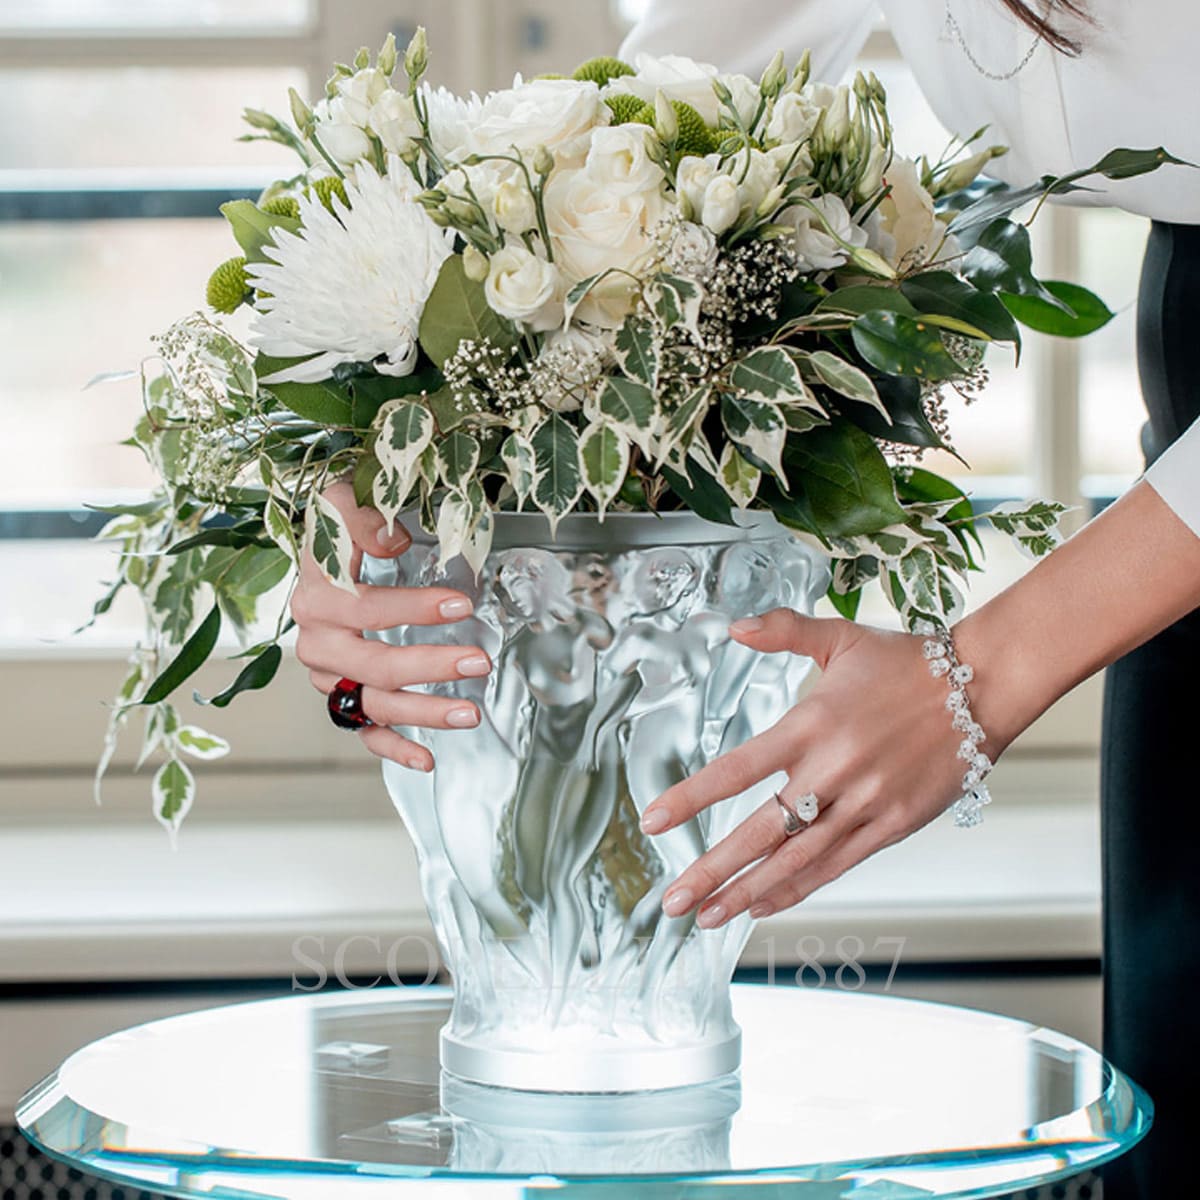 lalique bacchantes clear crystal vase